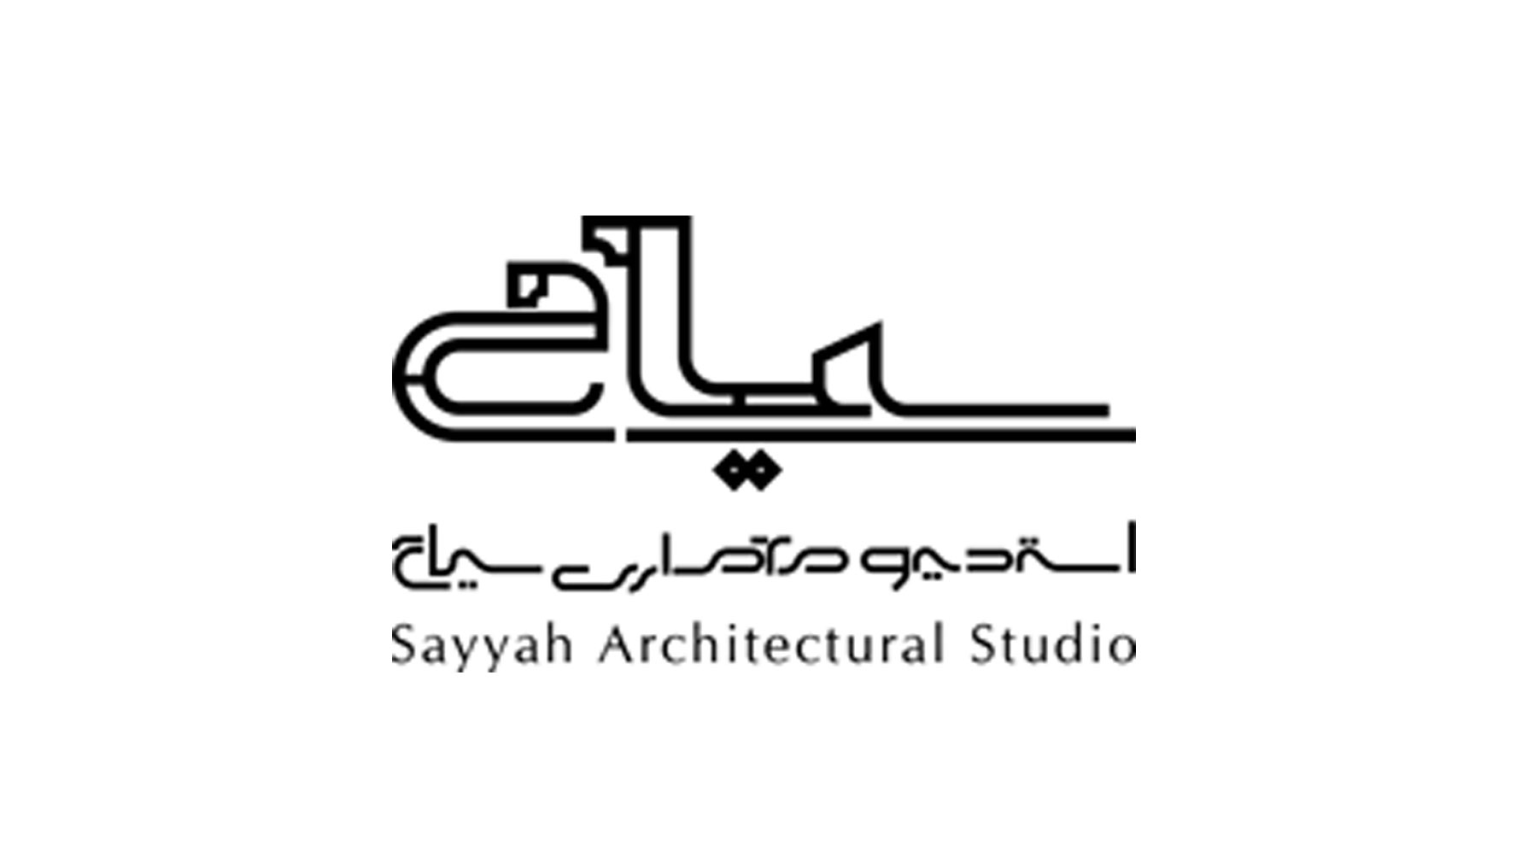 Sayyah Architectural Studio